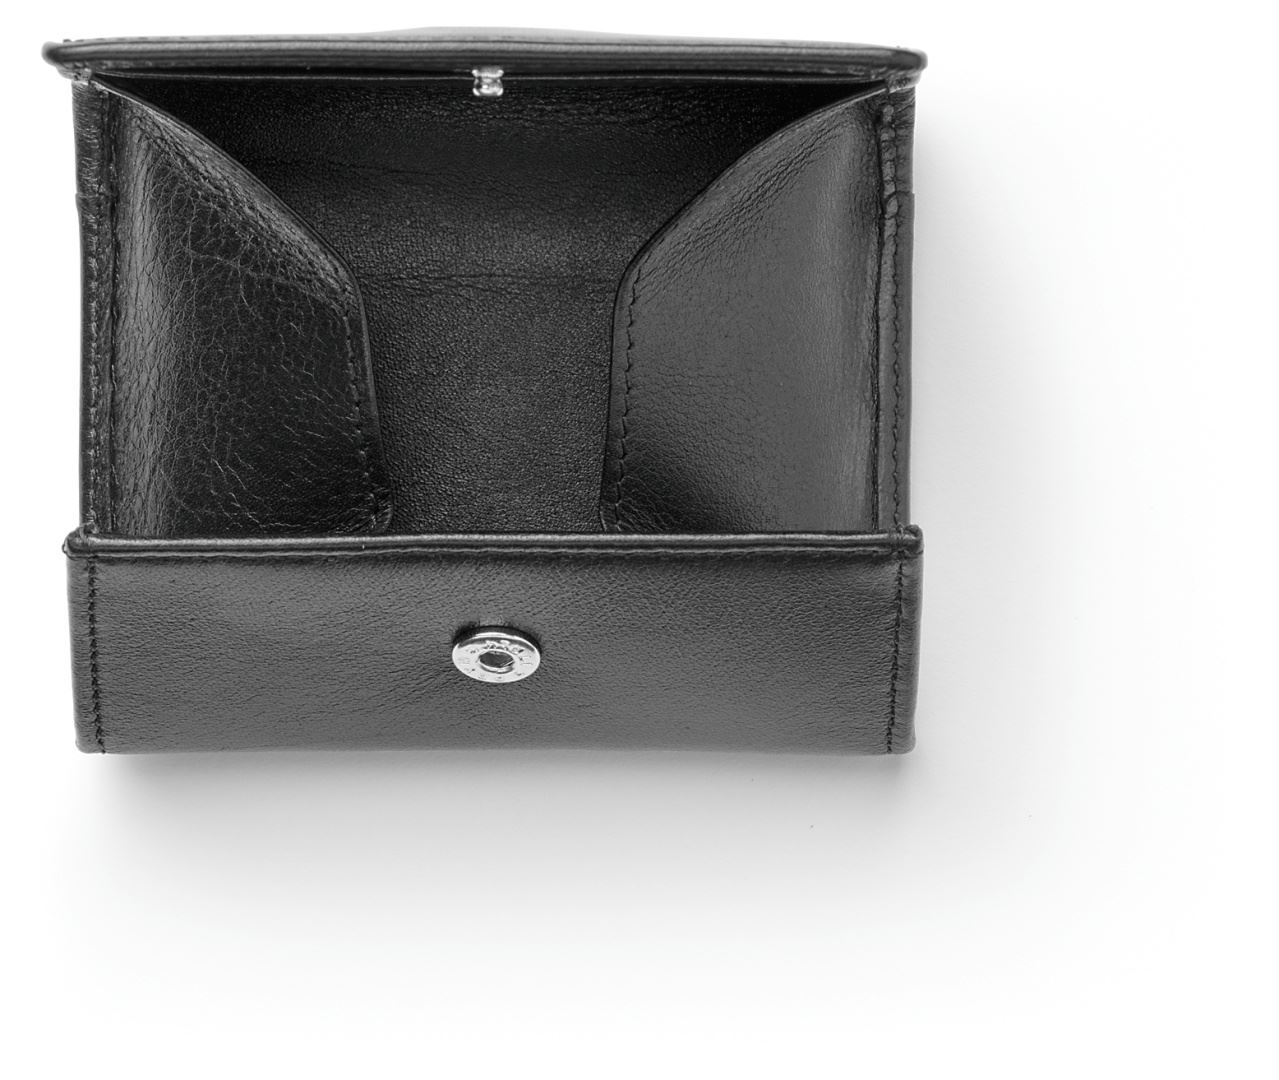 Graf-von-Faber-Castell - Coin purse small Classic black